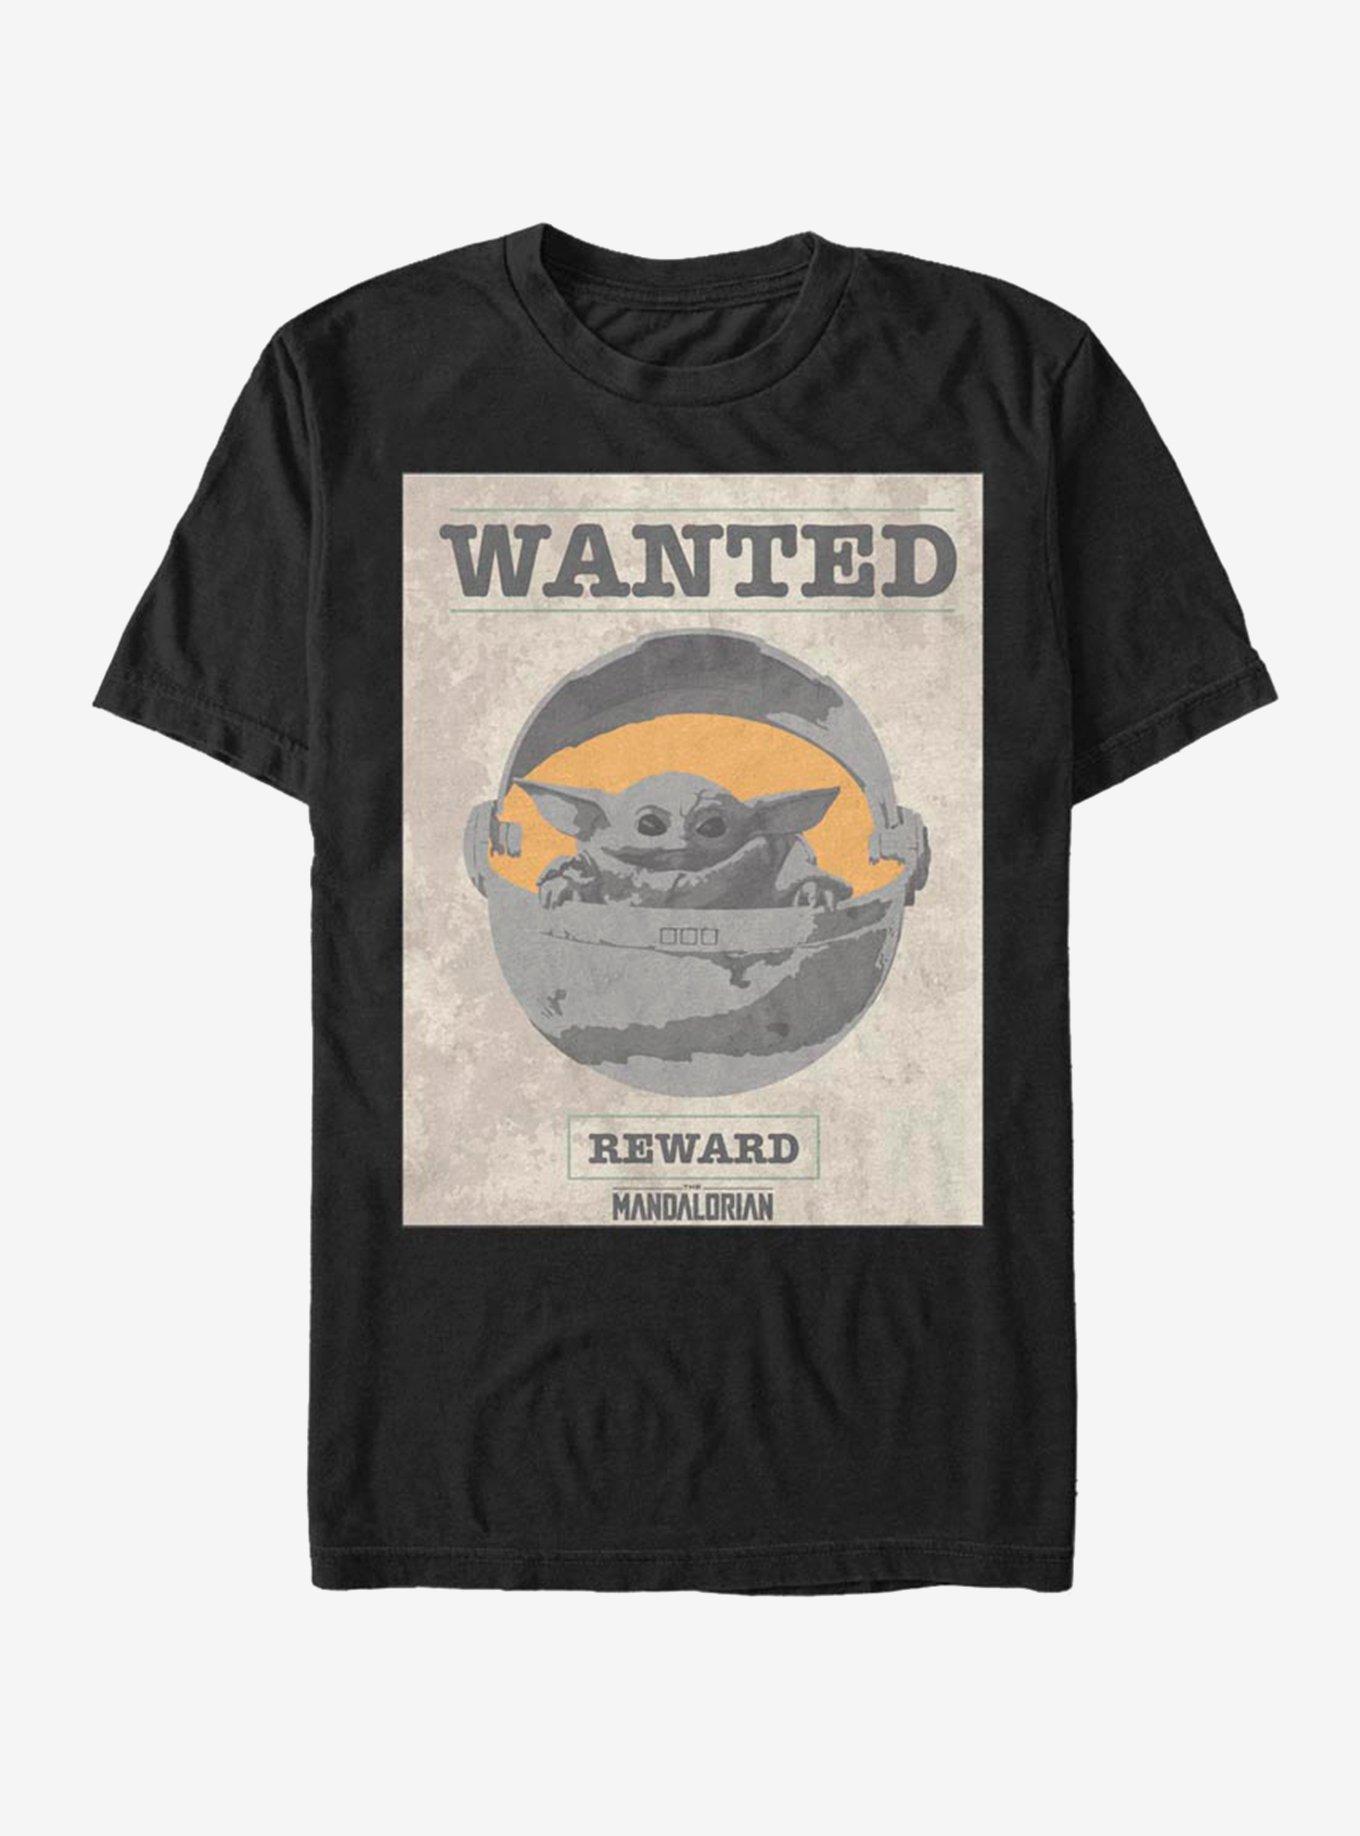 The Mandalorian Wanted Child T-Shirt